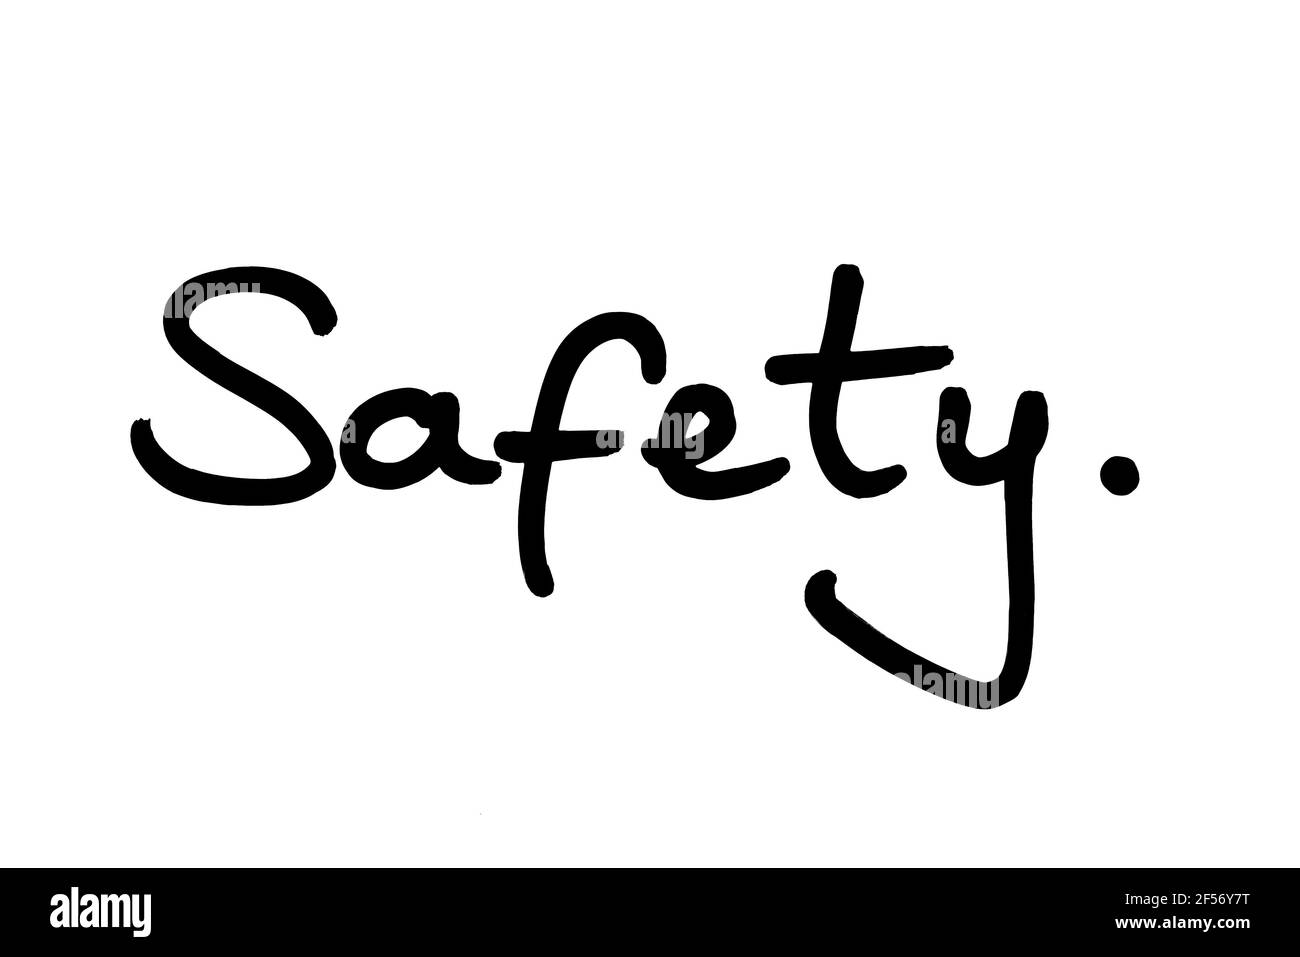 Safety, handwritten on a white background. Stock Photo